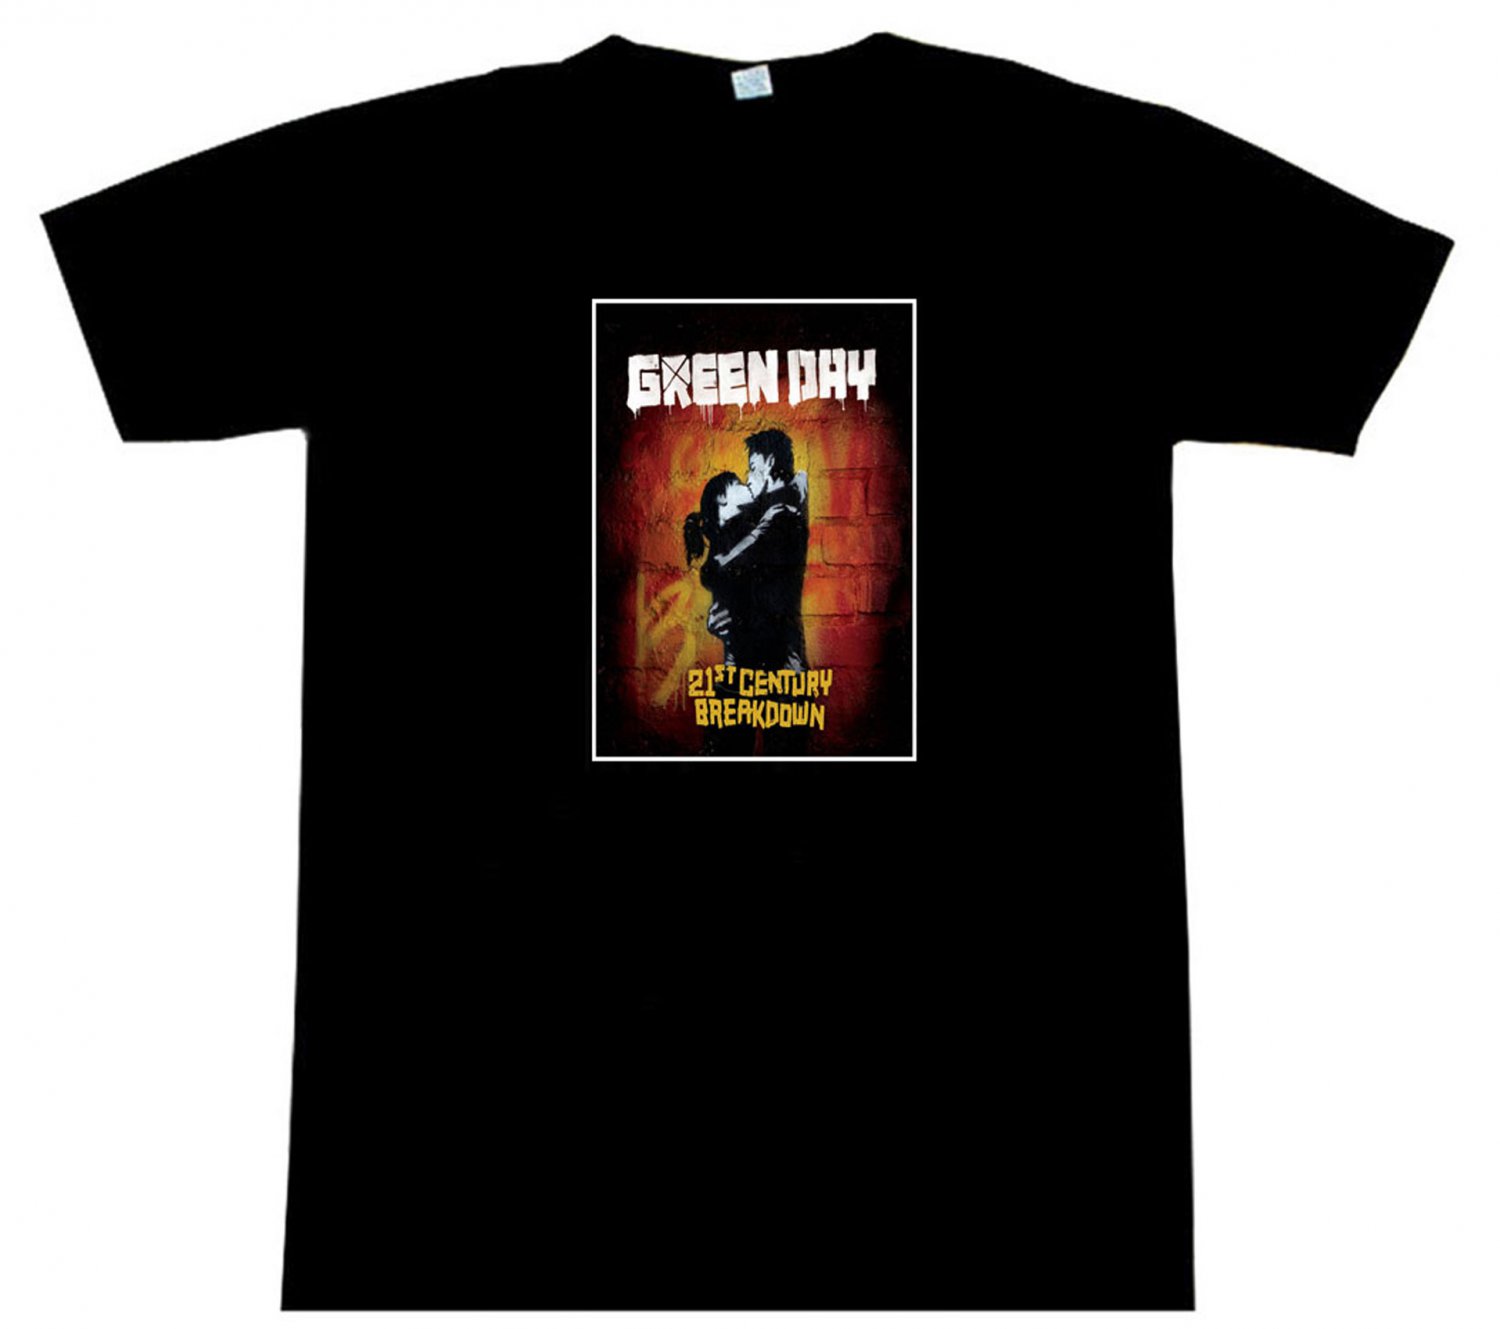 Green Day - 21st Century Breakdown - T-Shirt